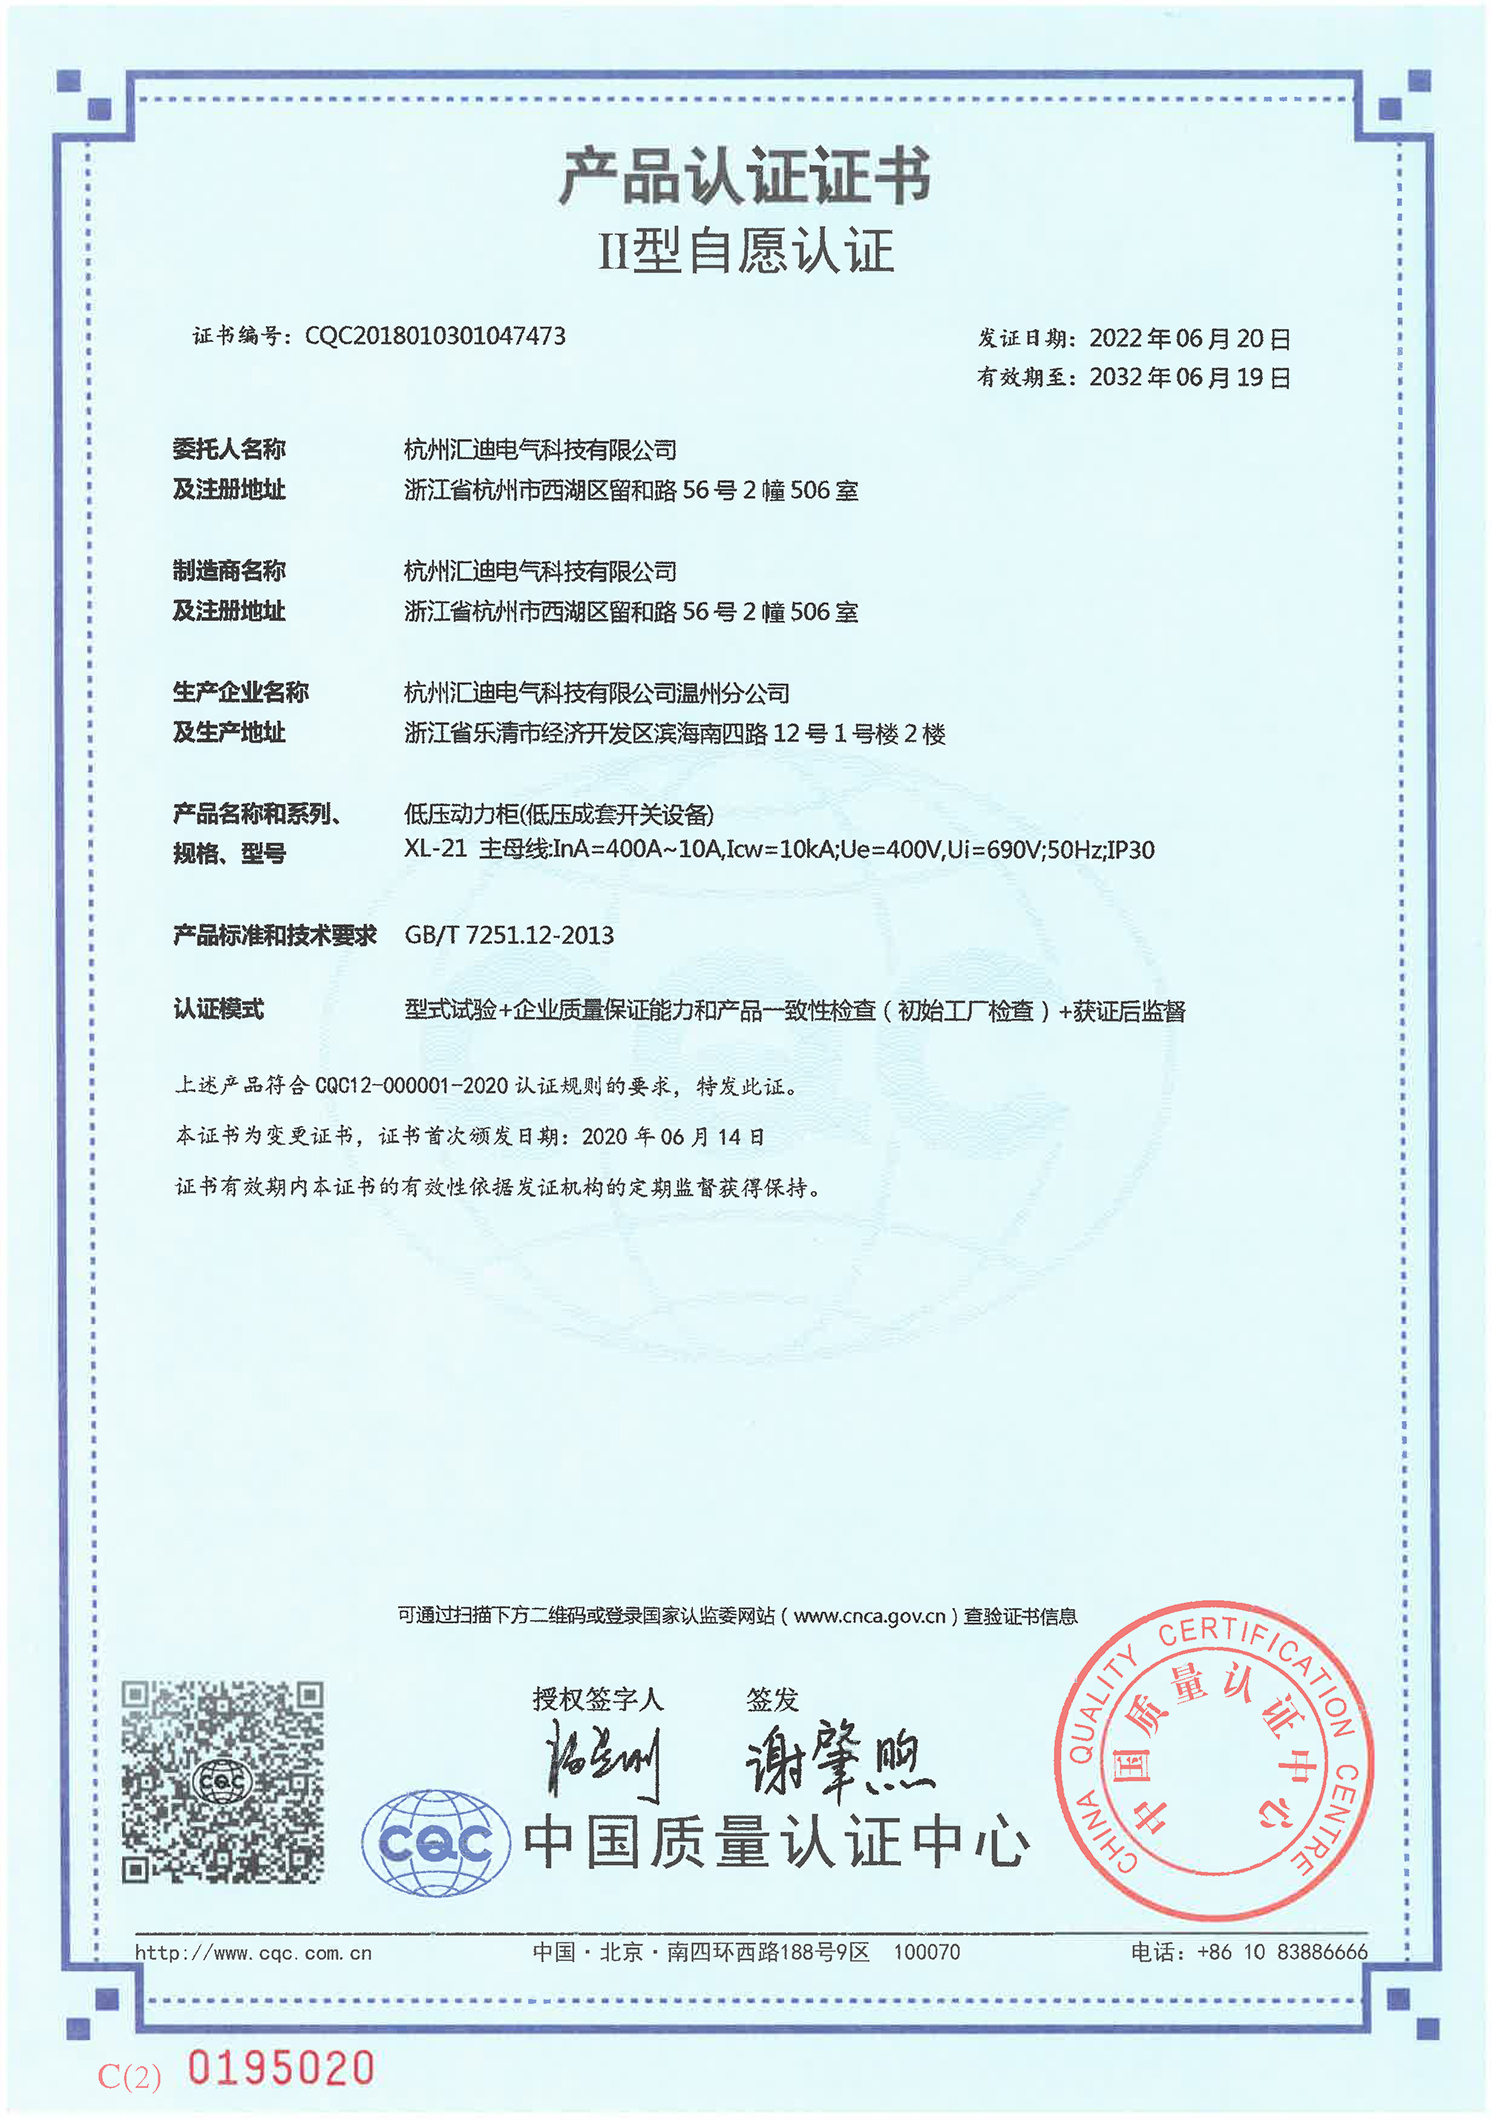 huud certificate 1